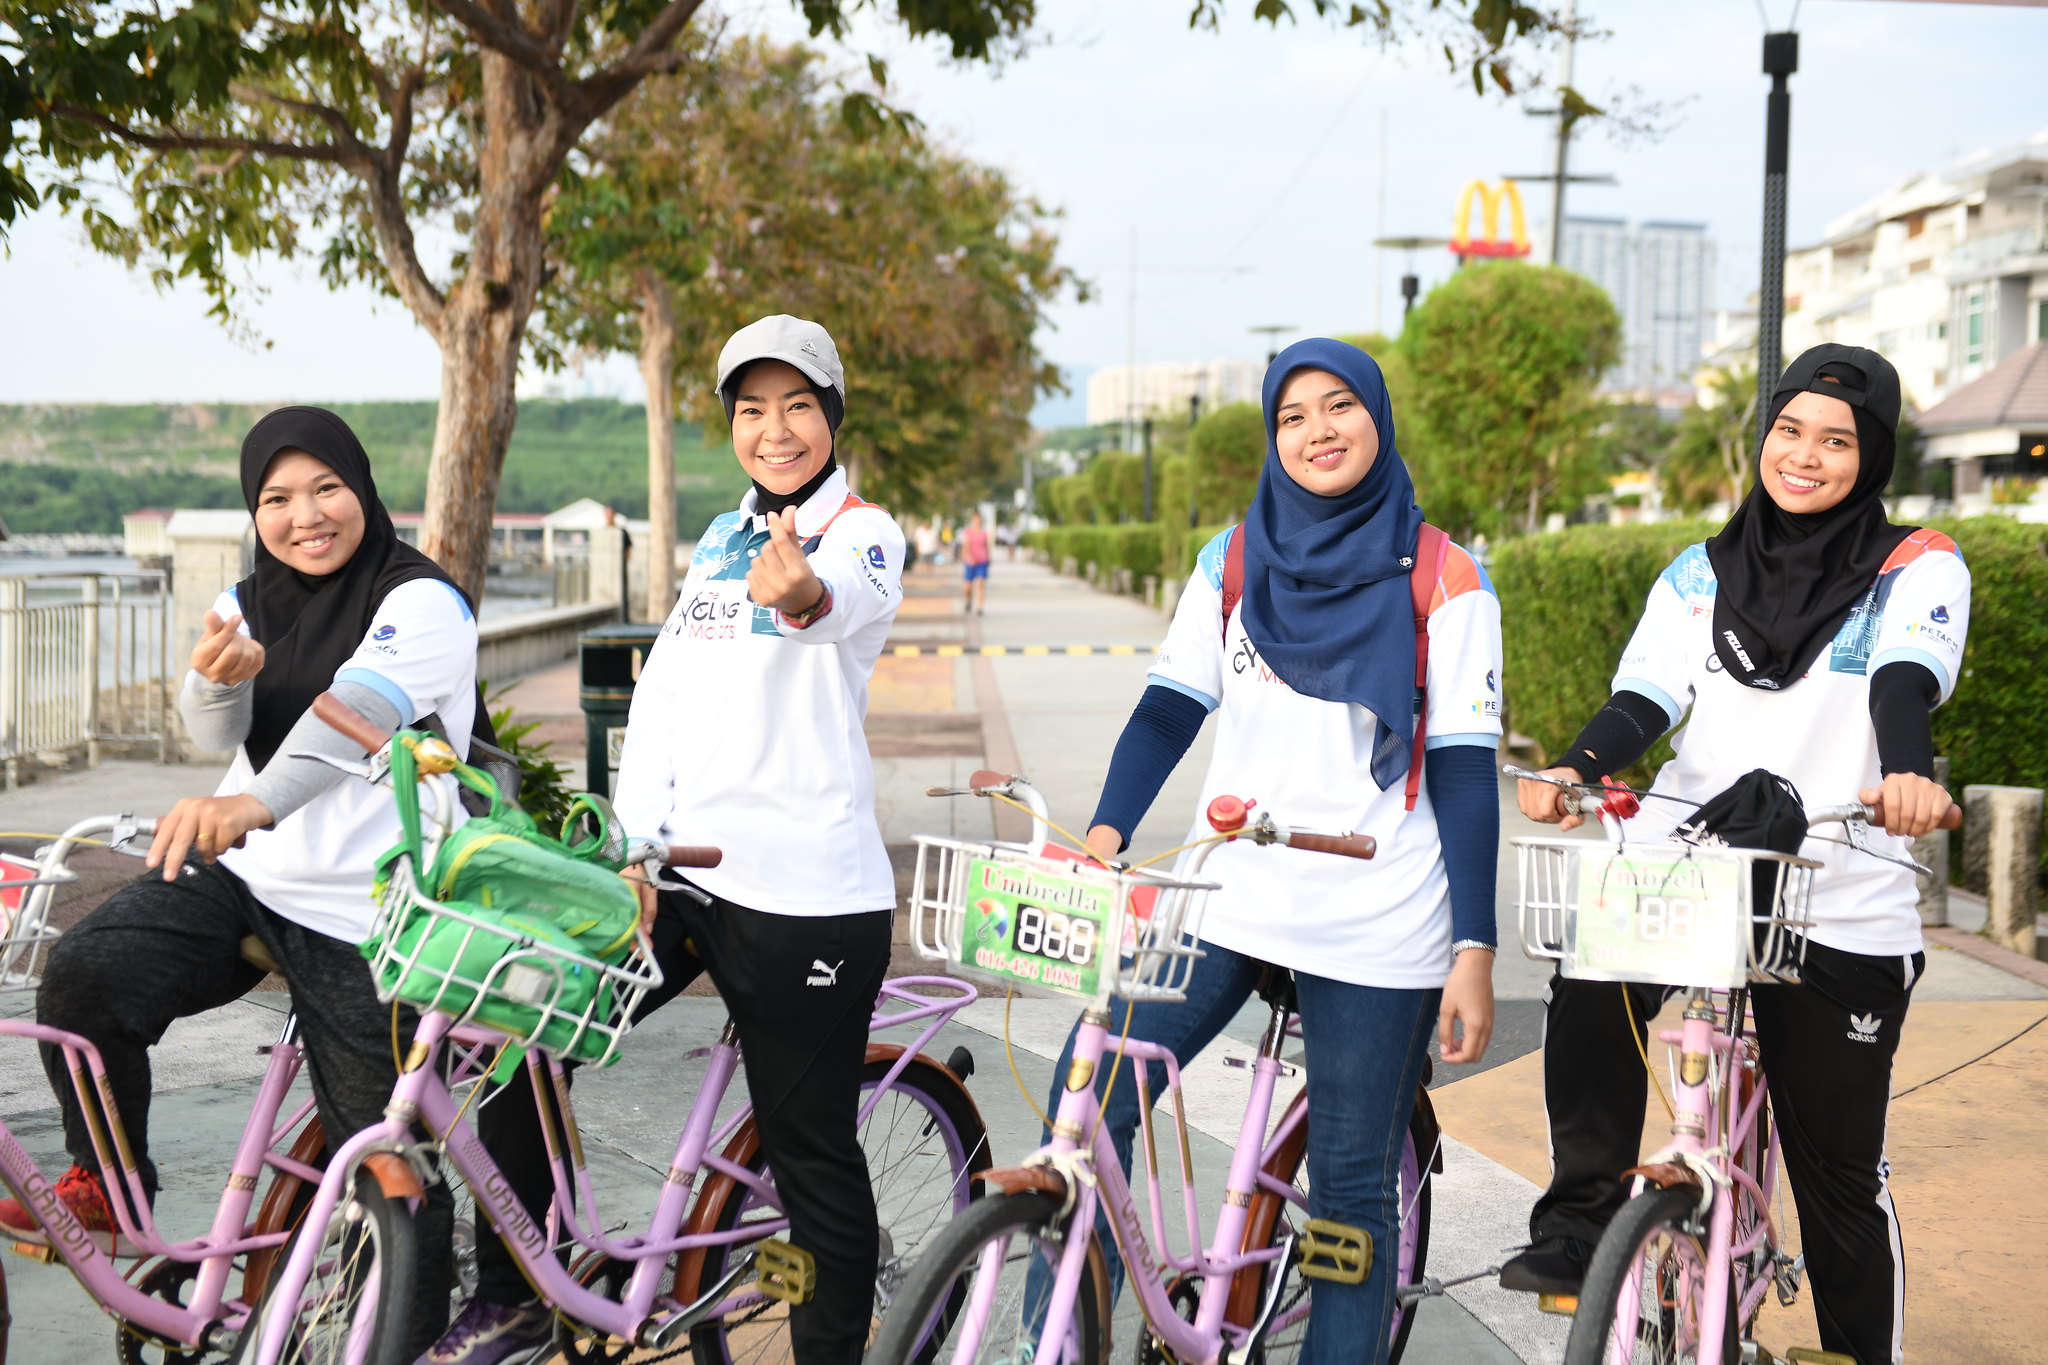 Mayors cycling thorugh the streets of Penang